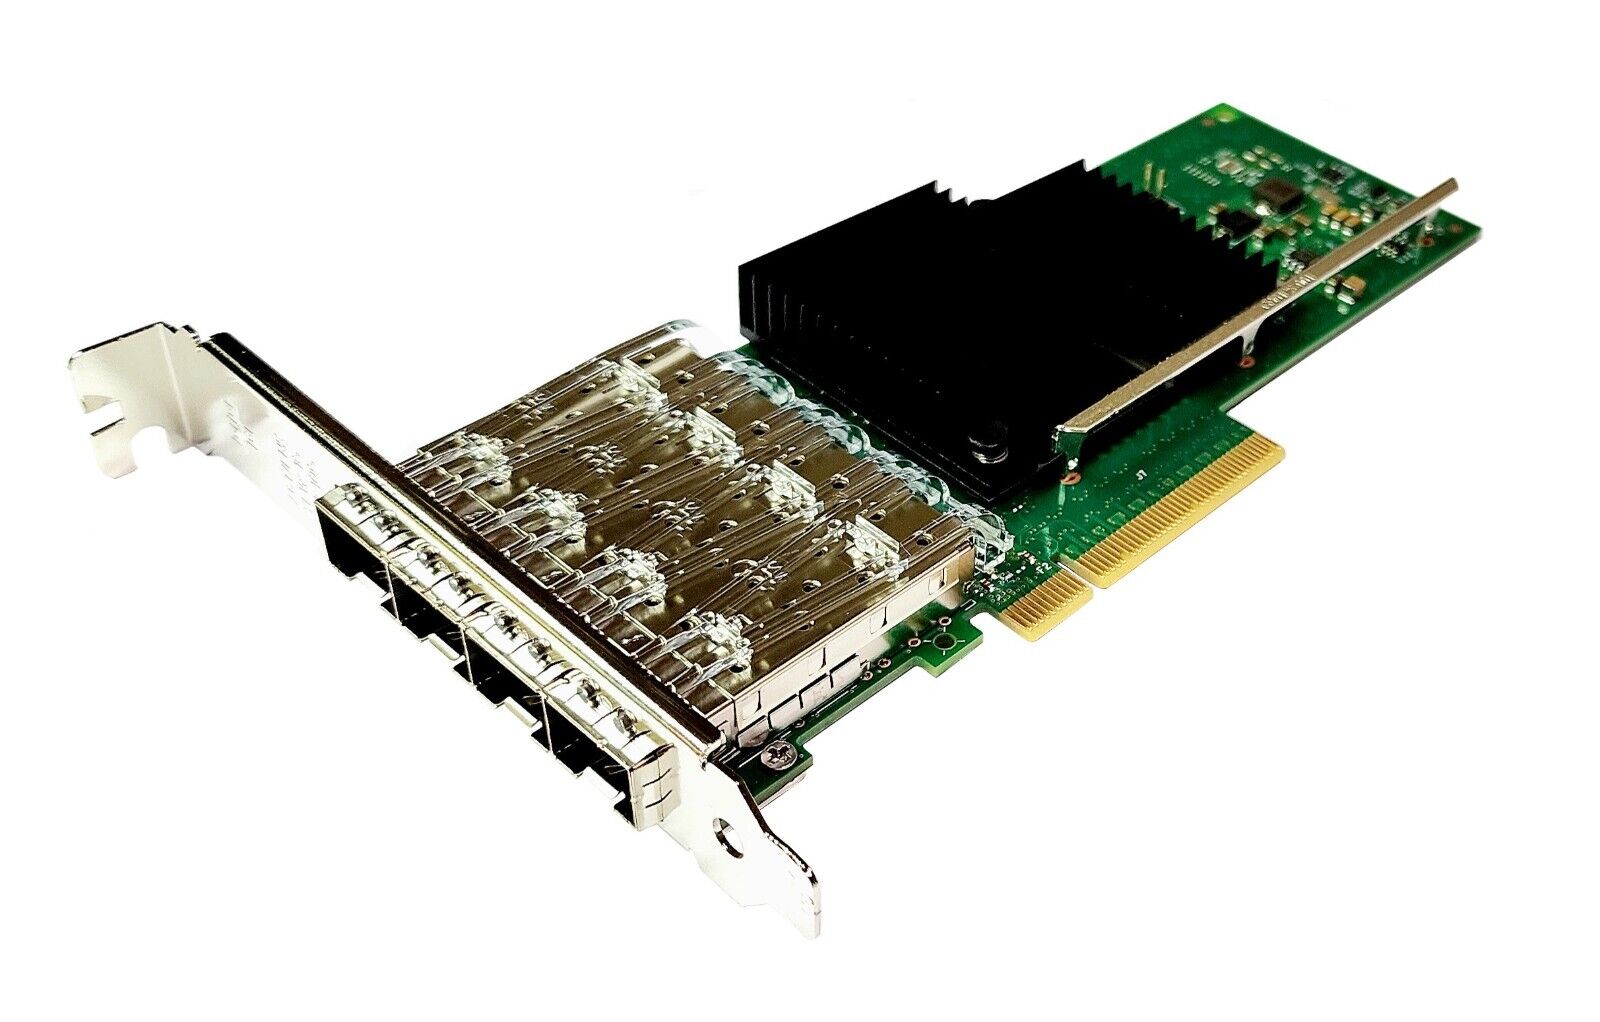 Cisco UCSC-PCIE-IQ10GF X710-DA4 10GB SFP+ Network Adapter Card NIC (Full-Height)